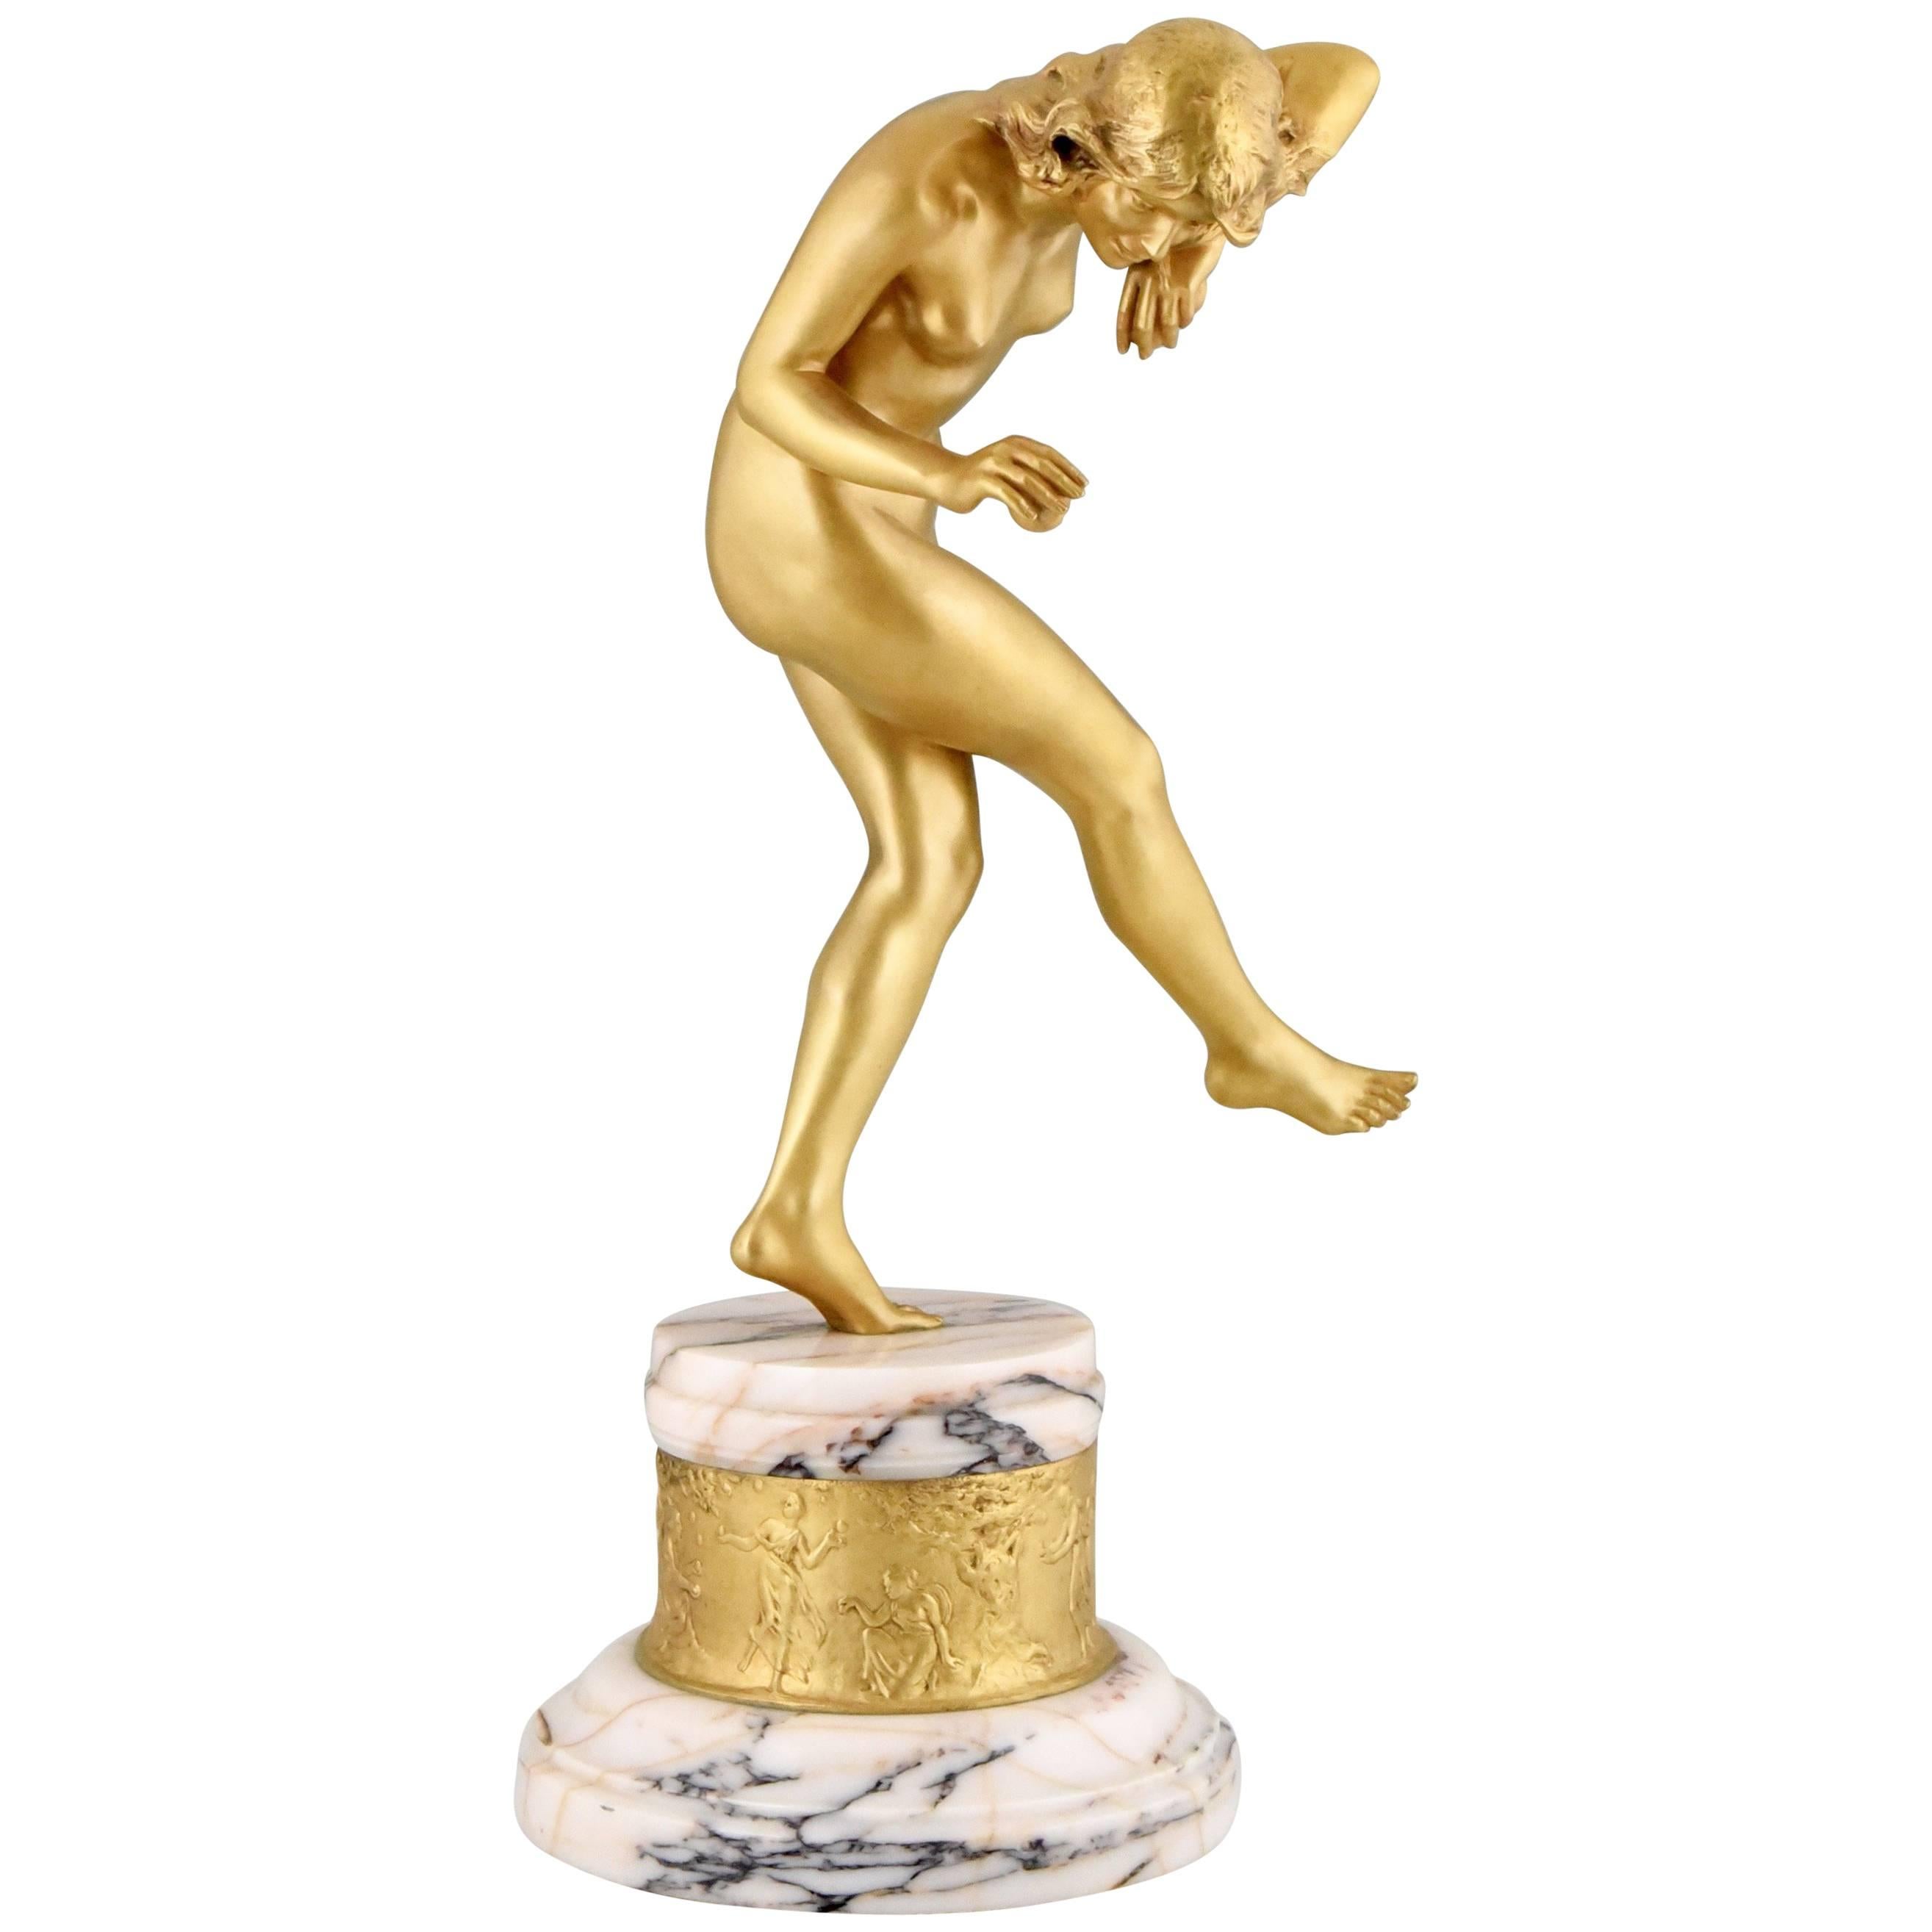 Art Deco Gilt Bronze Sculpture Nude Dancer with Apple by Delapchier, 1920 France